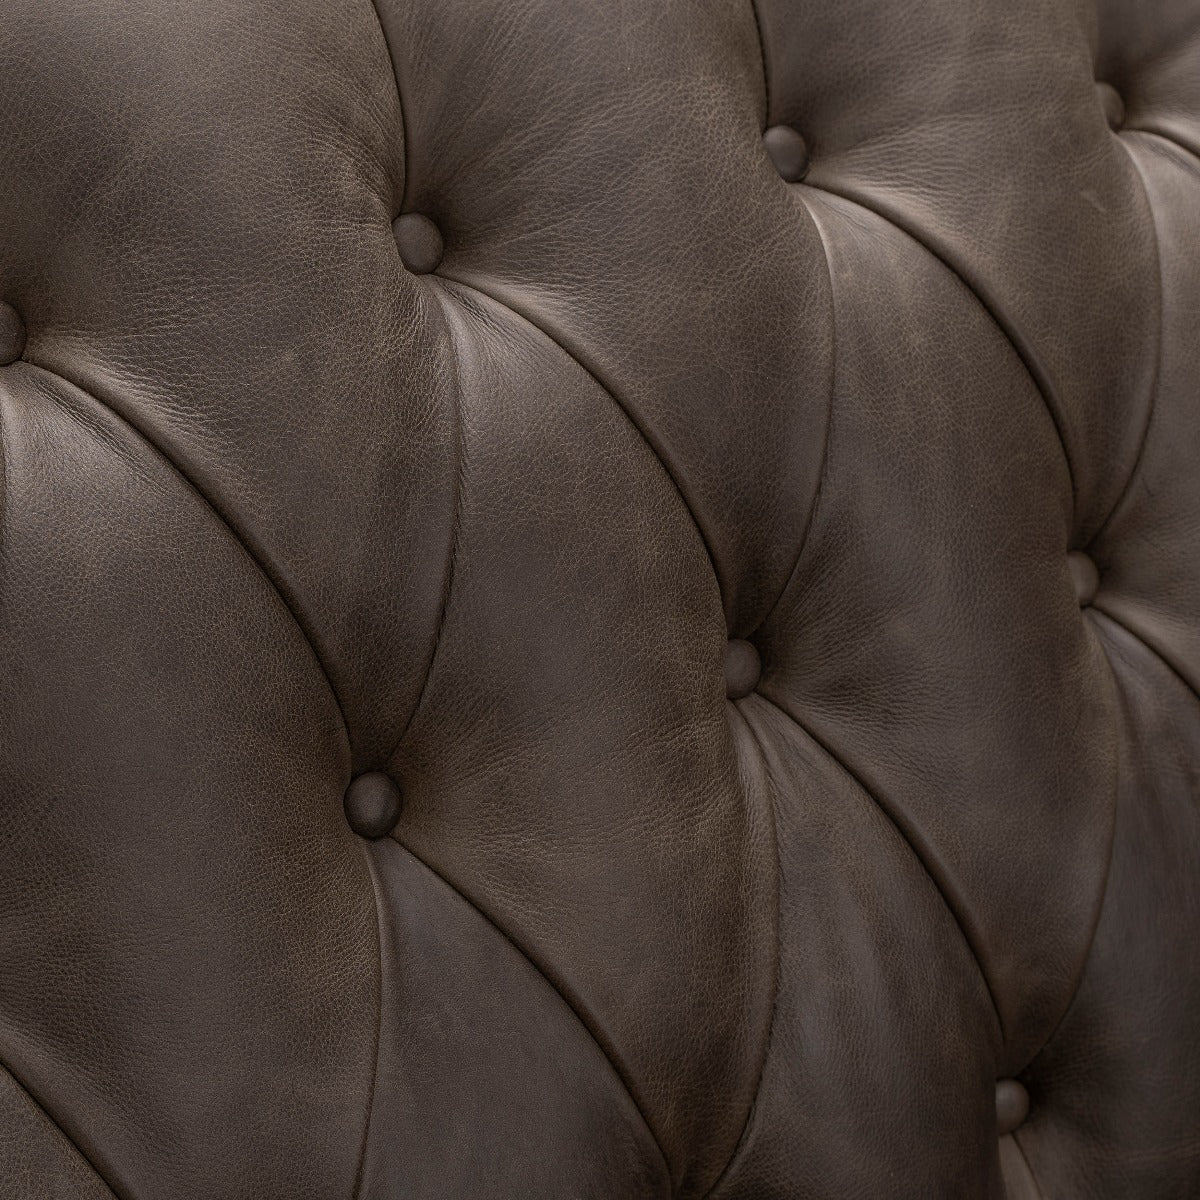 Pulaski 927 Charlie Sofa Collection - Top Grain Leather